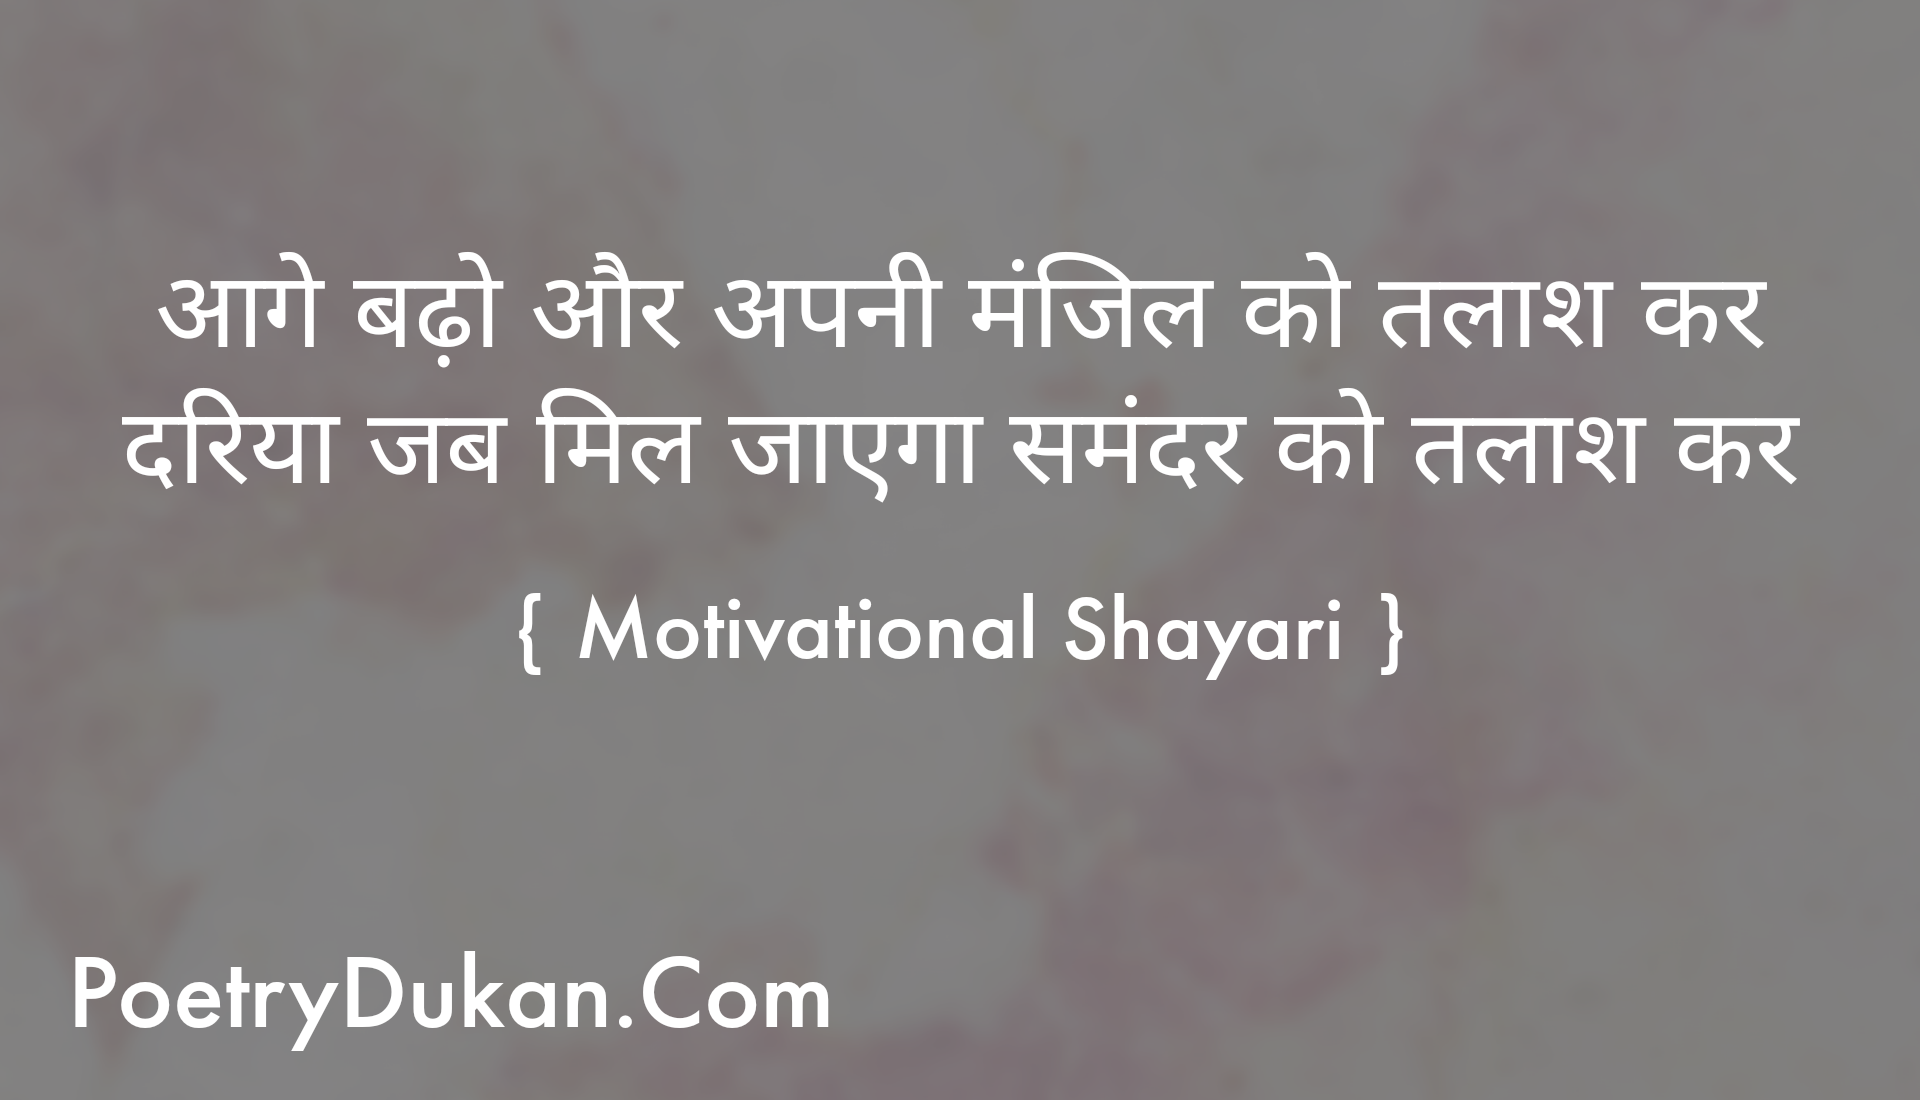 Motivational Shayari in Hindi 2021